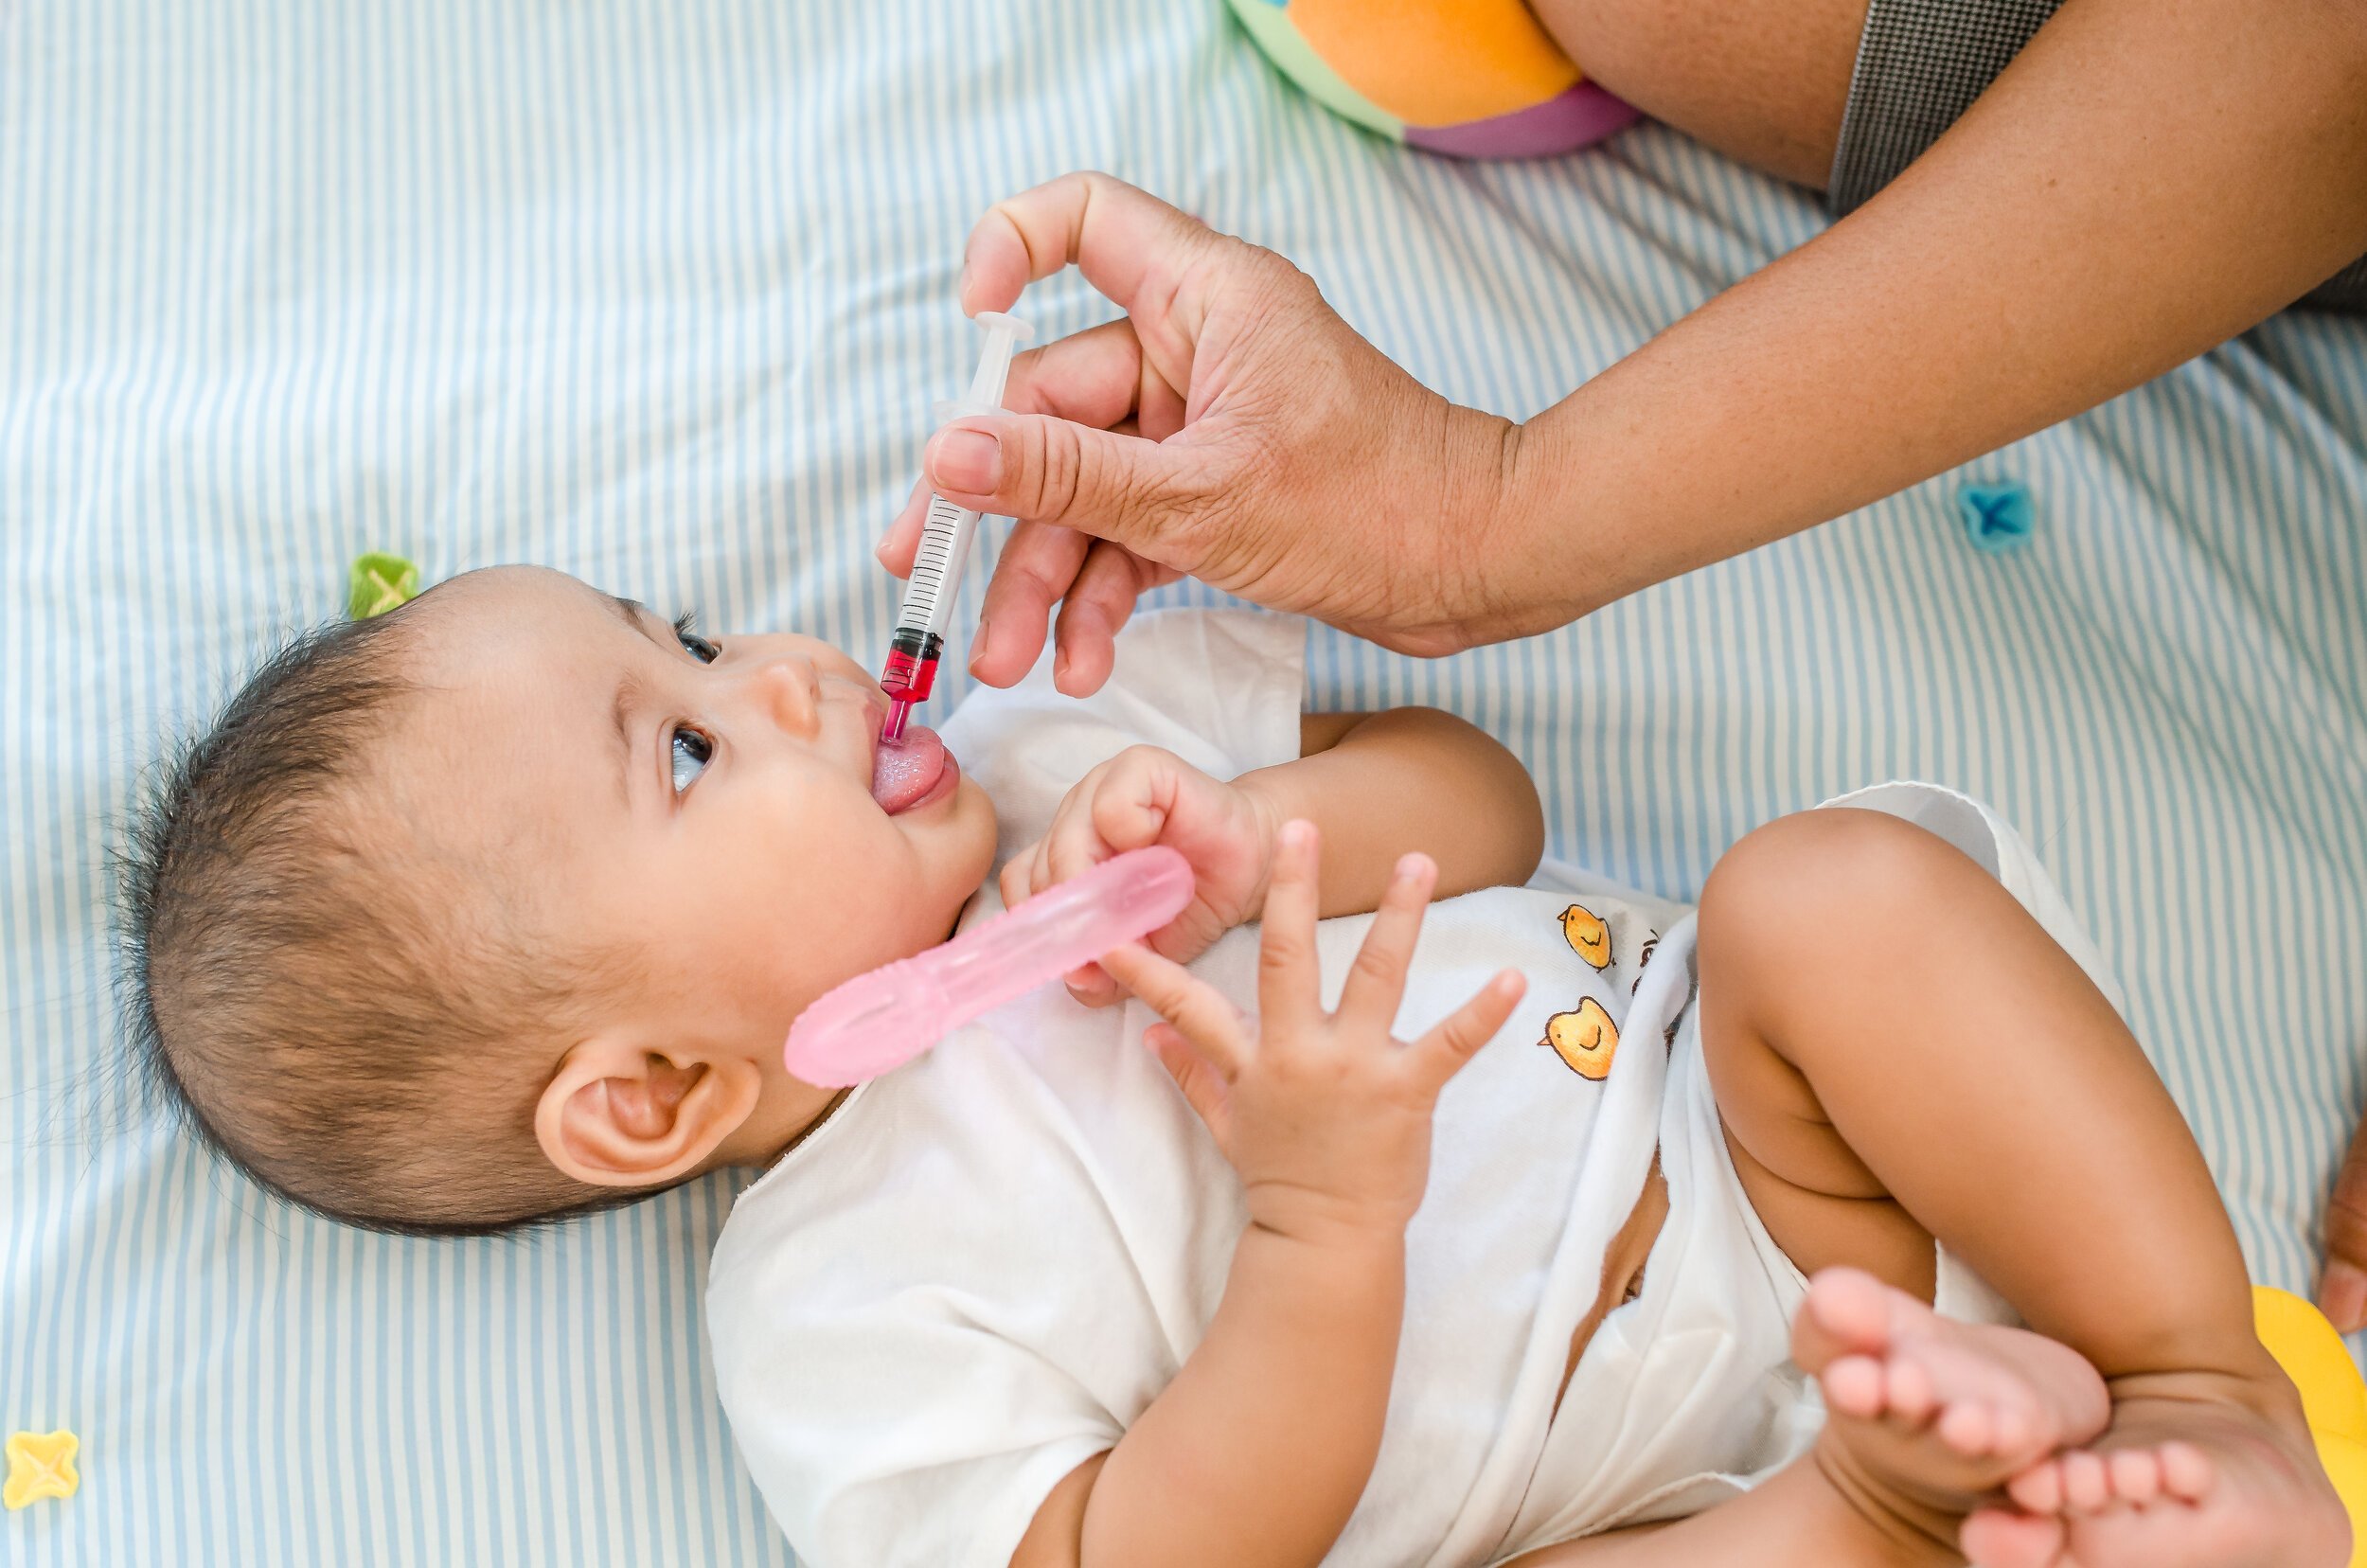 baby receiving medication through an oral syringe